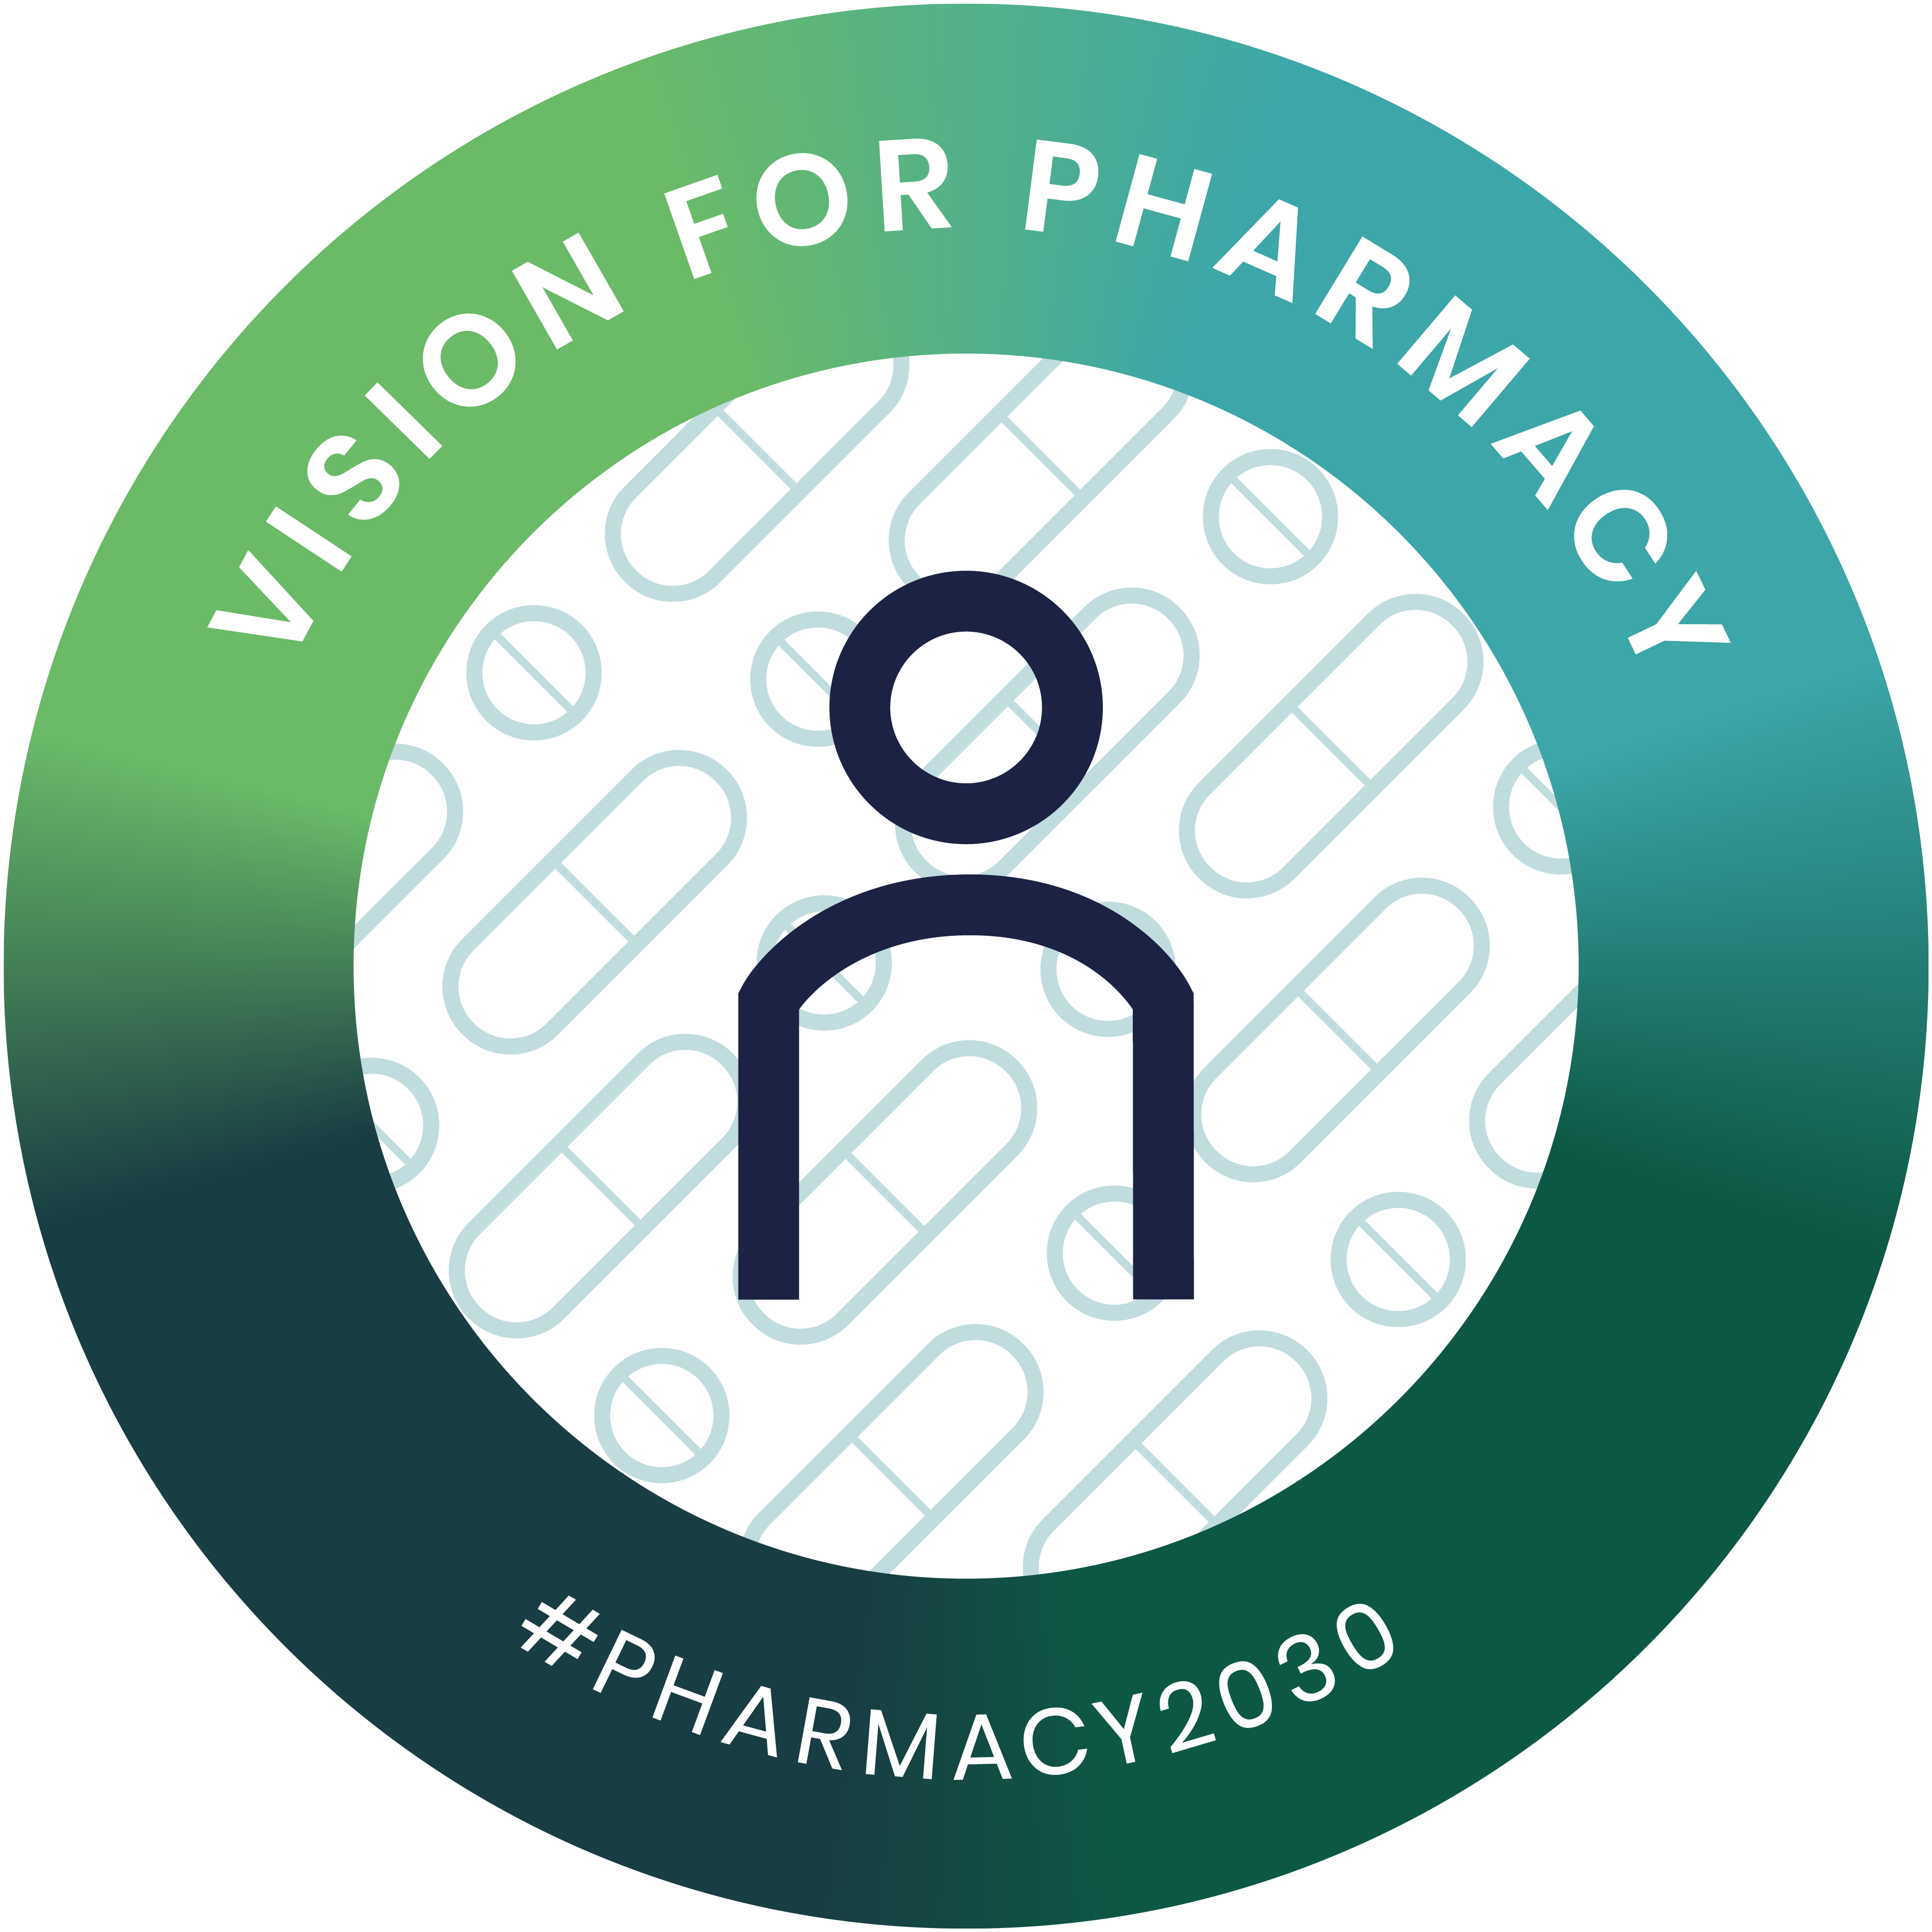 Pharmacy 2030 logo637850295584710148